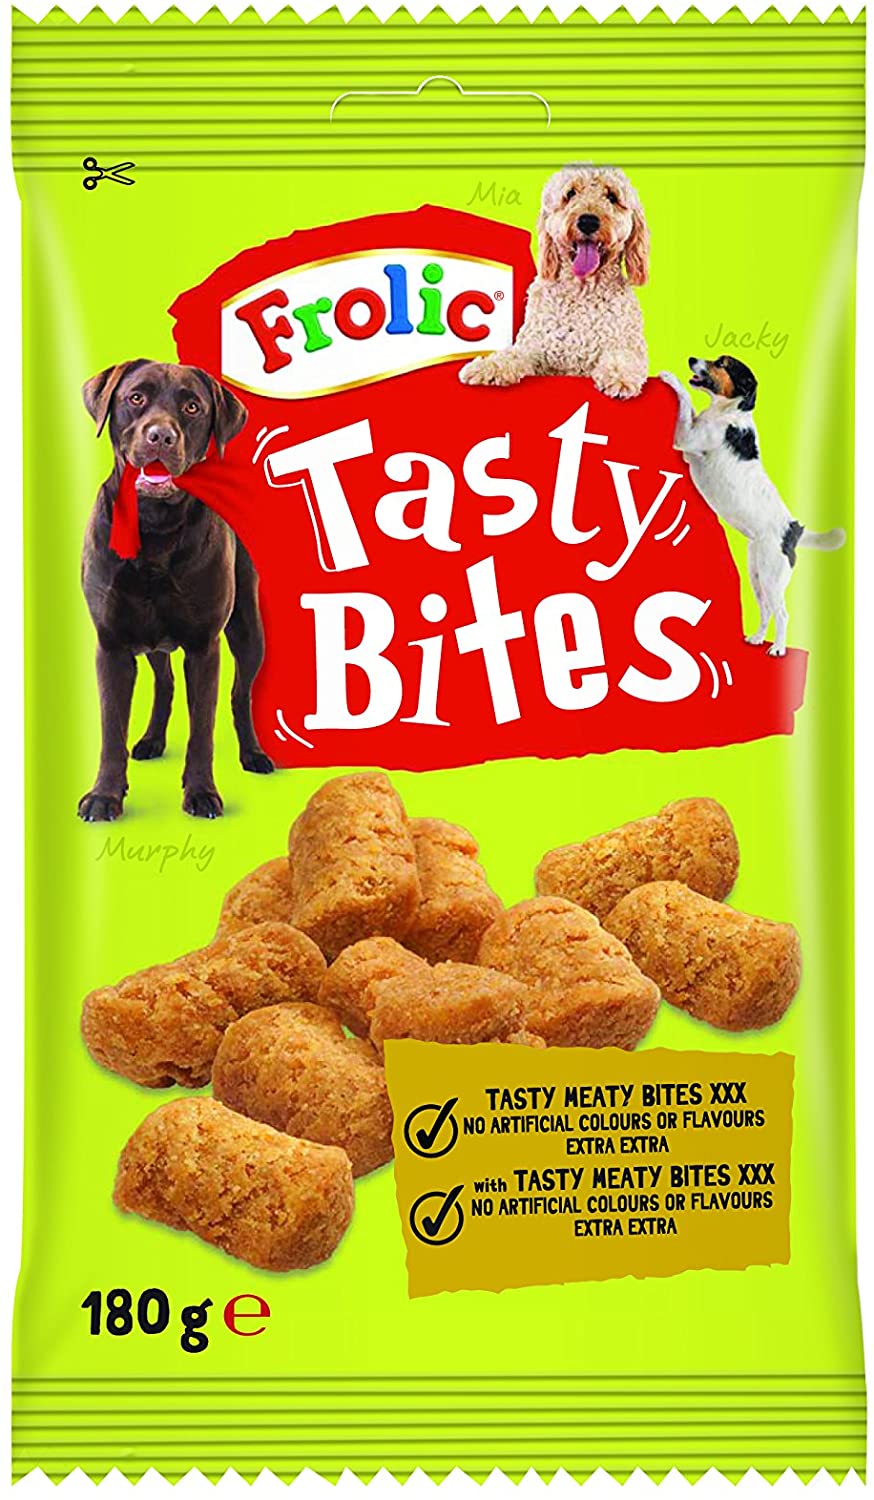  Bolsita de 180g de Tasty Bites para perros | [Pack de 11] 